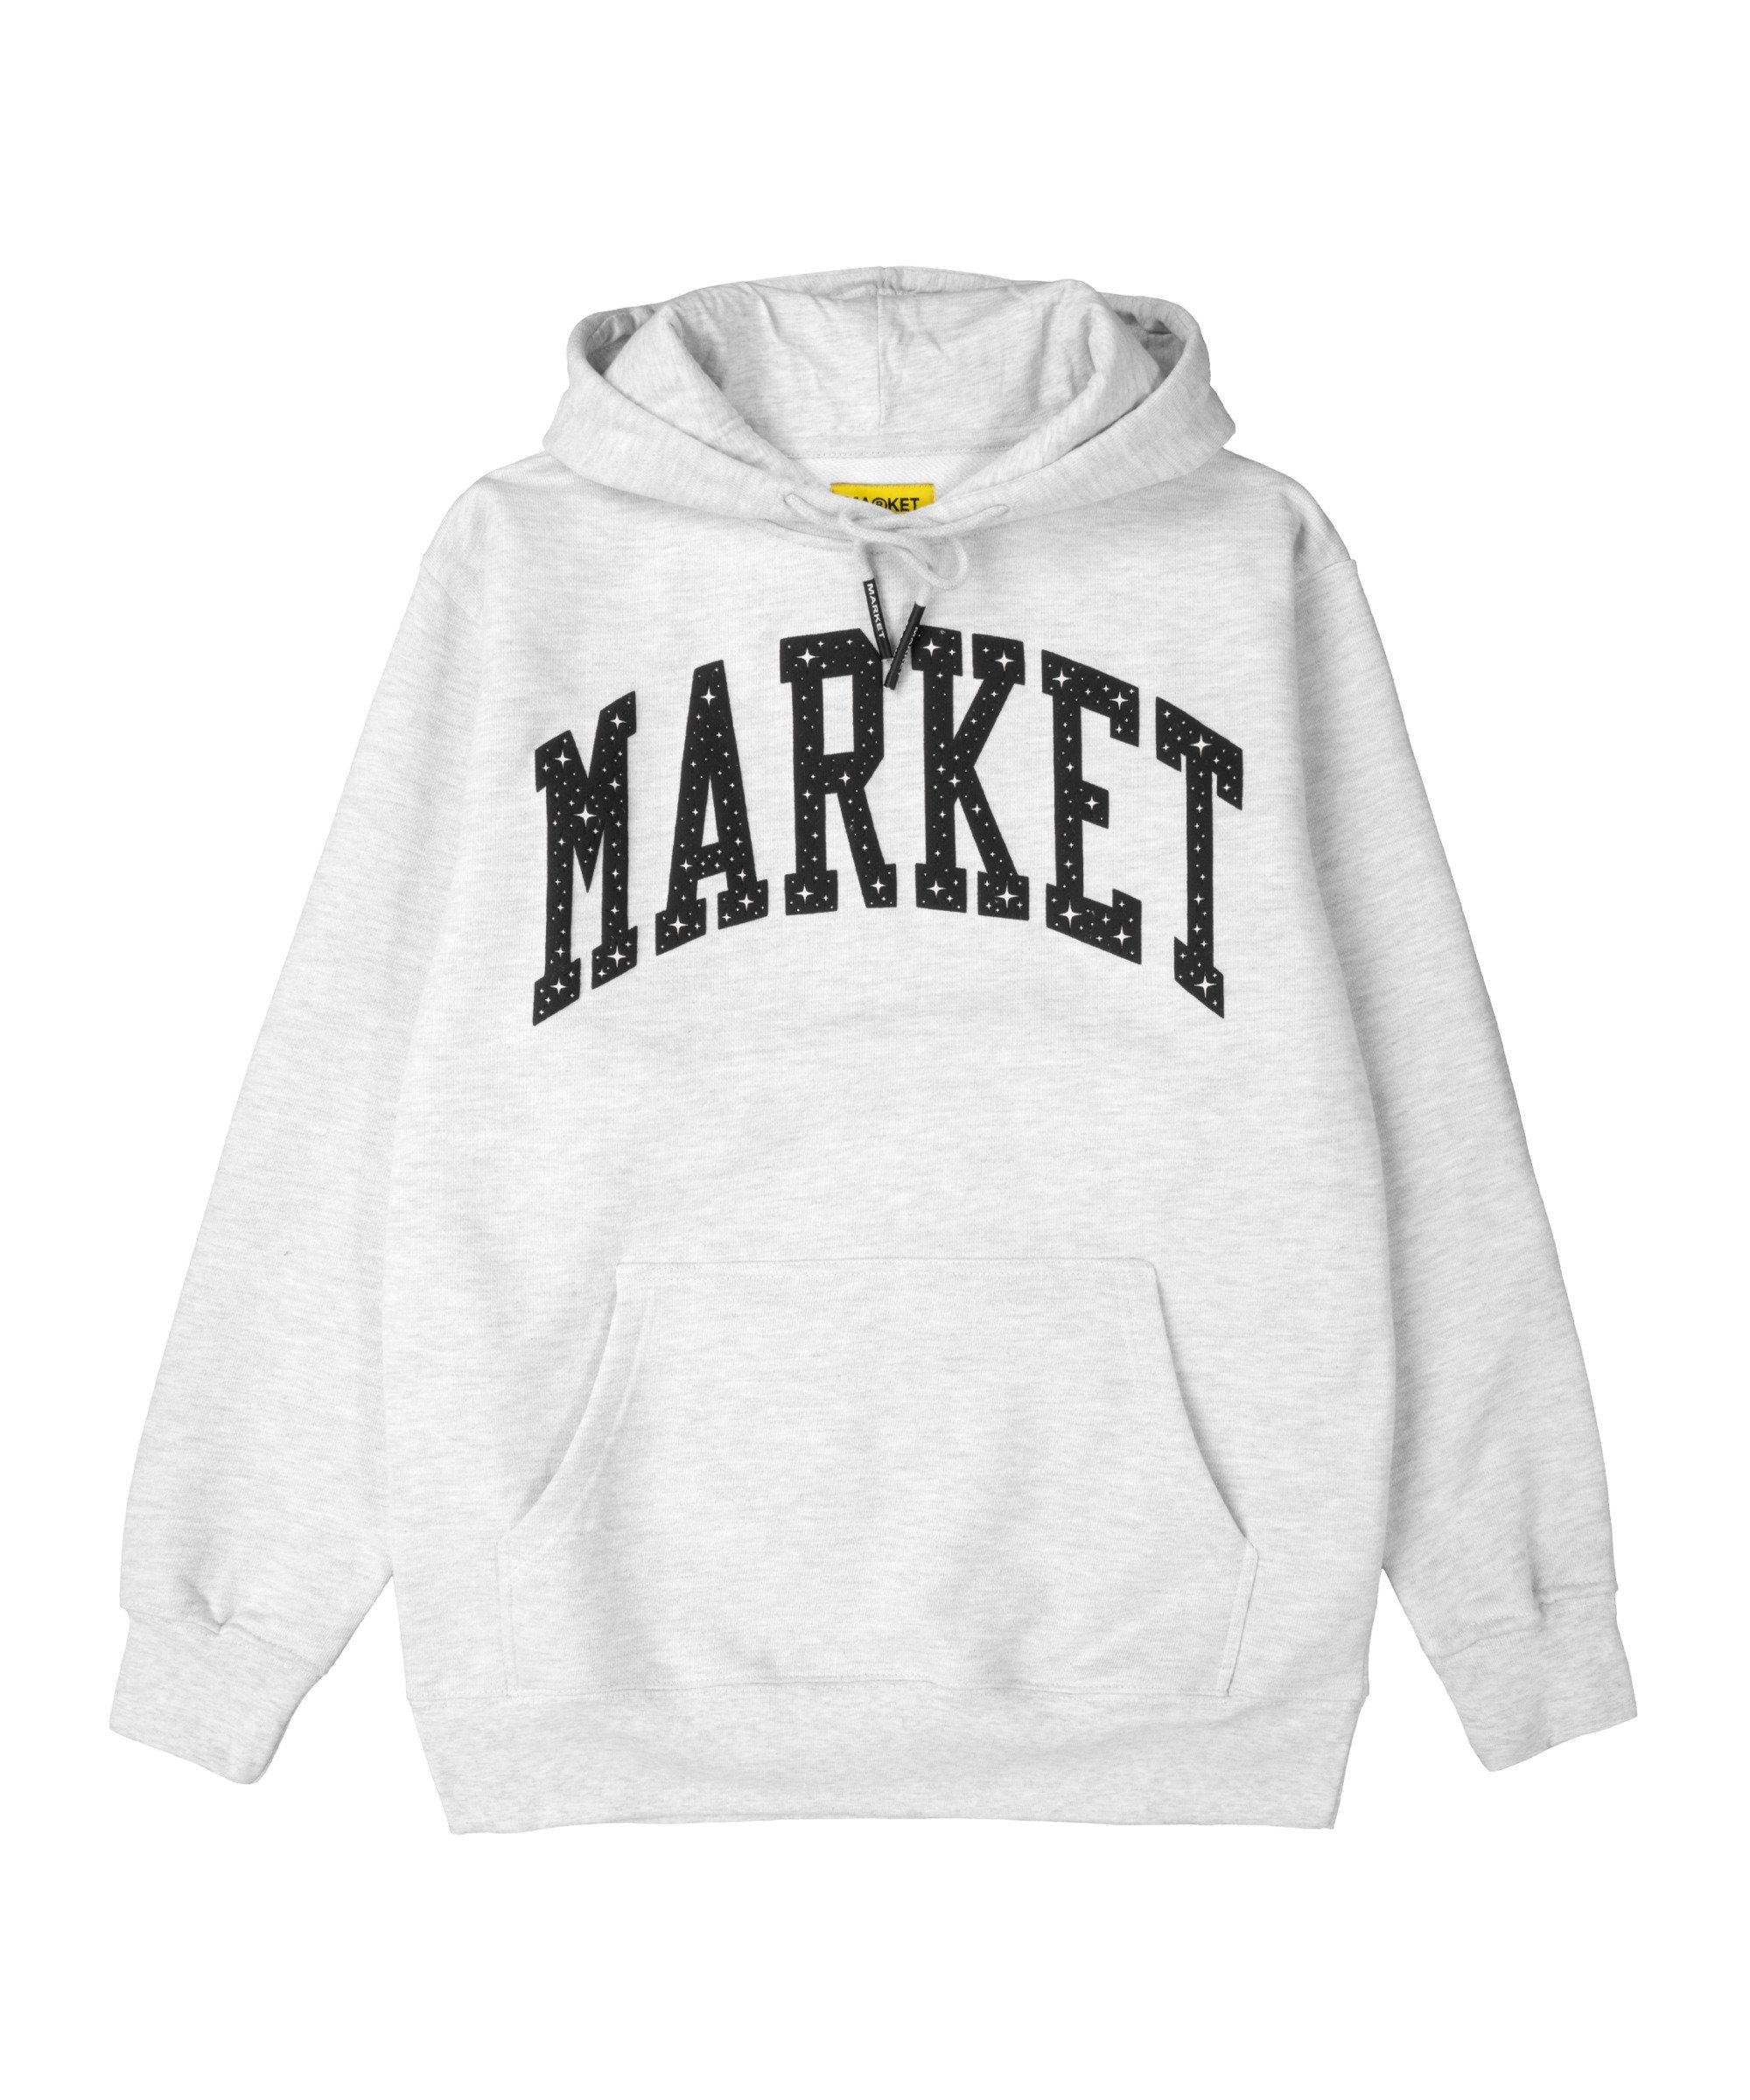 Market Sweatshirt Arc Puff Hoody